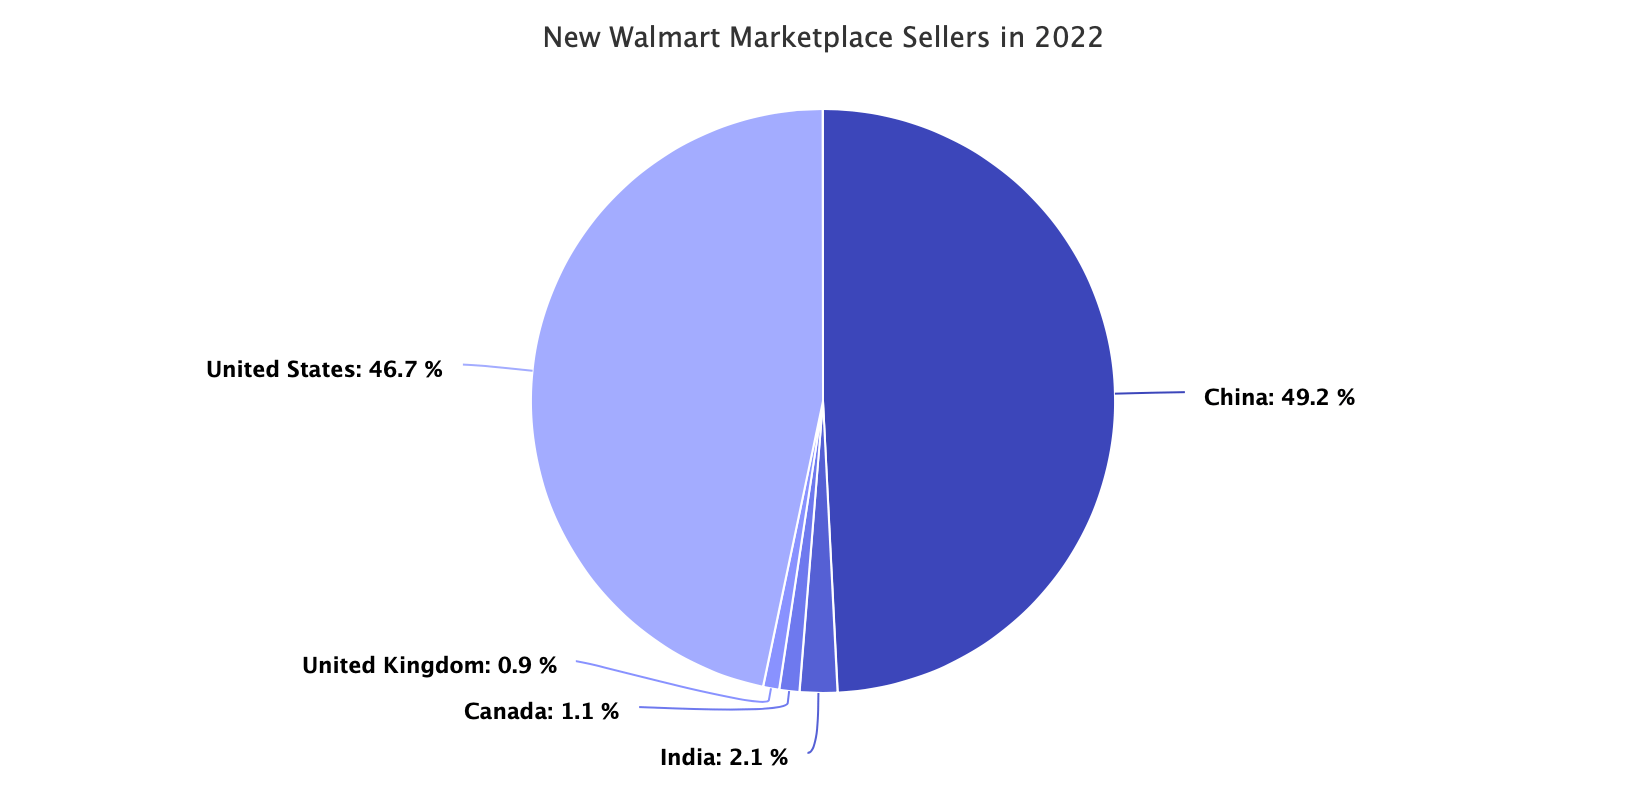 New Walmart Marketplace Sellers in 2022